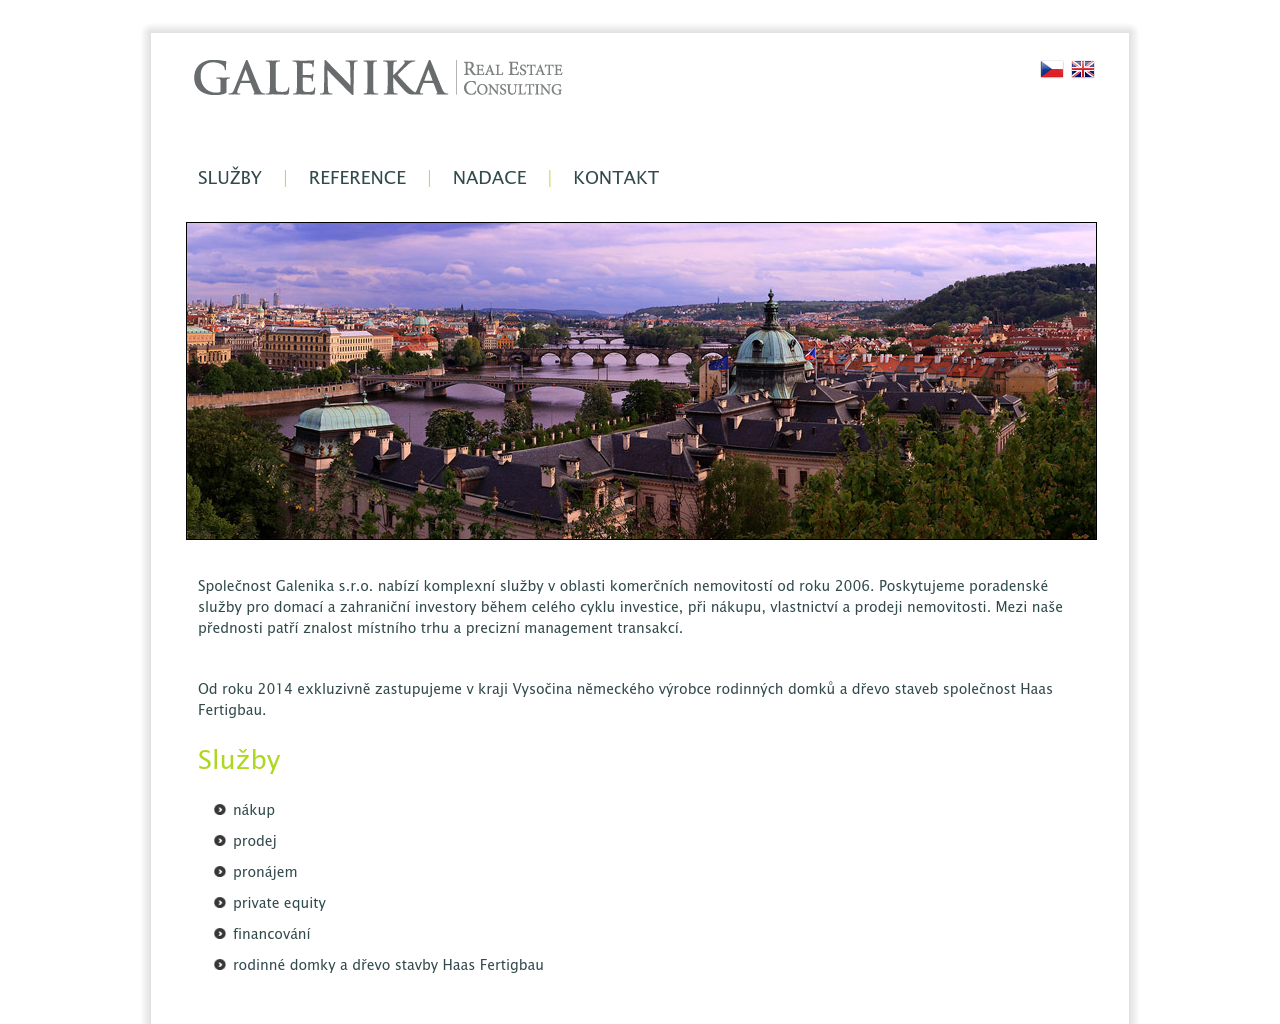 Site Image galenika.cz v 1280x1024